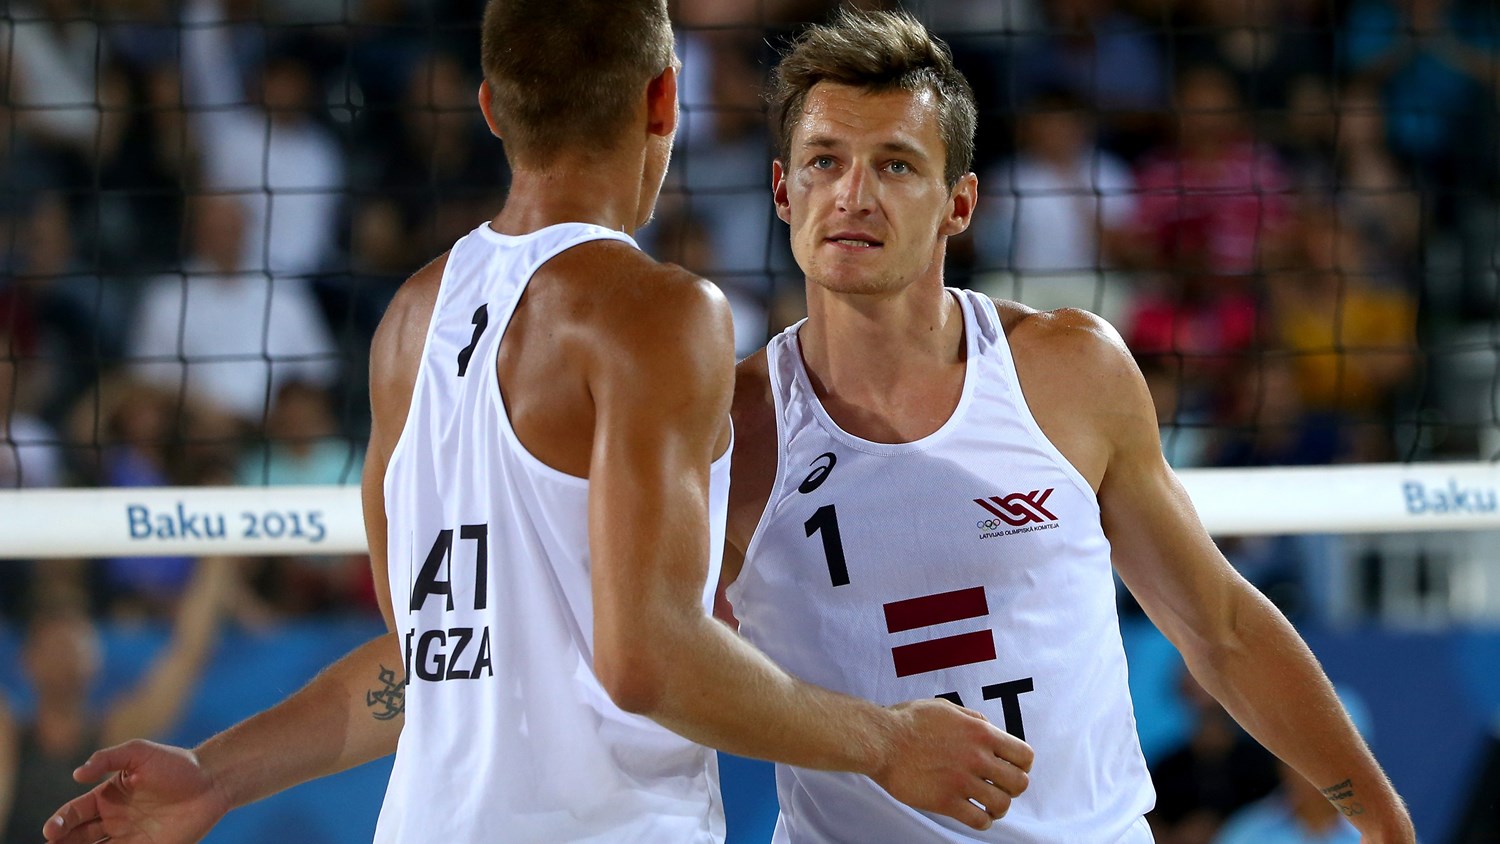 Plavins and Regza win Beach Volleyball gold at Baku 2015